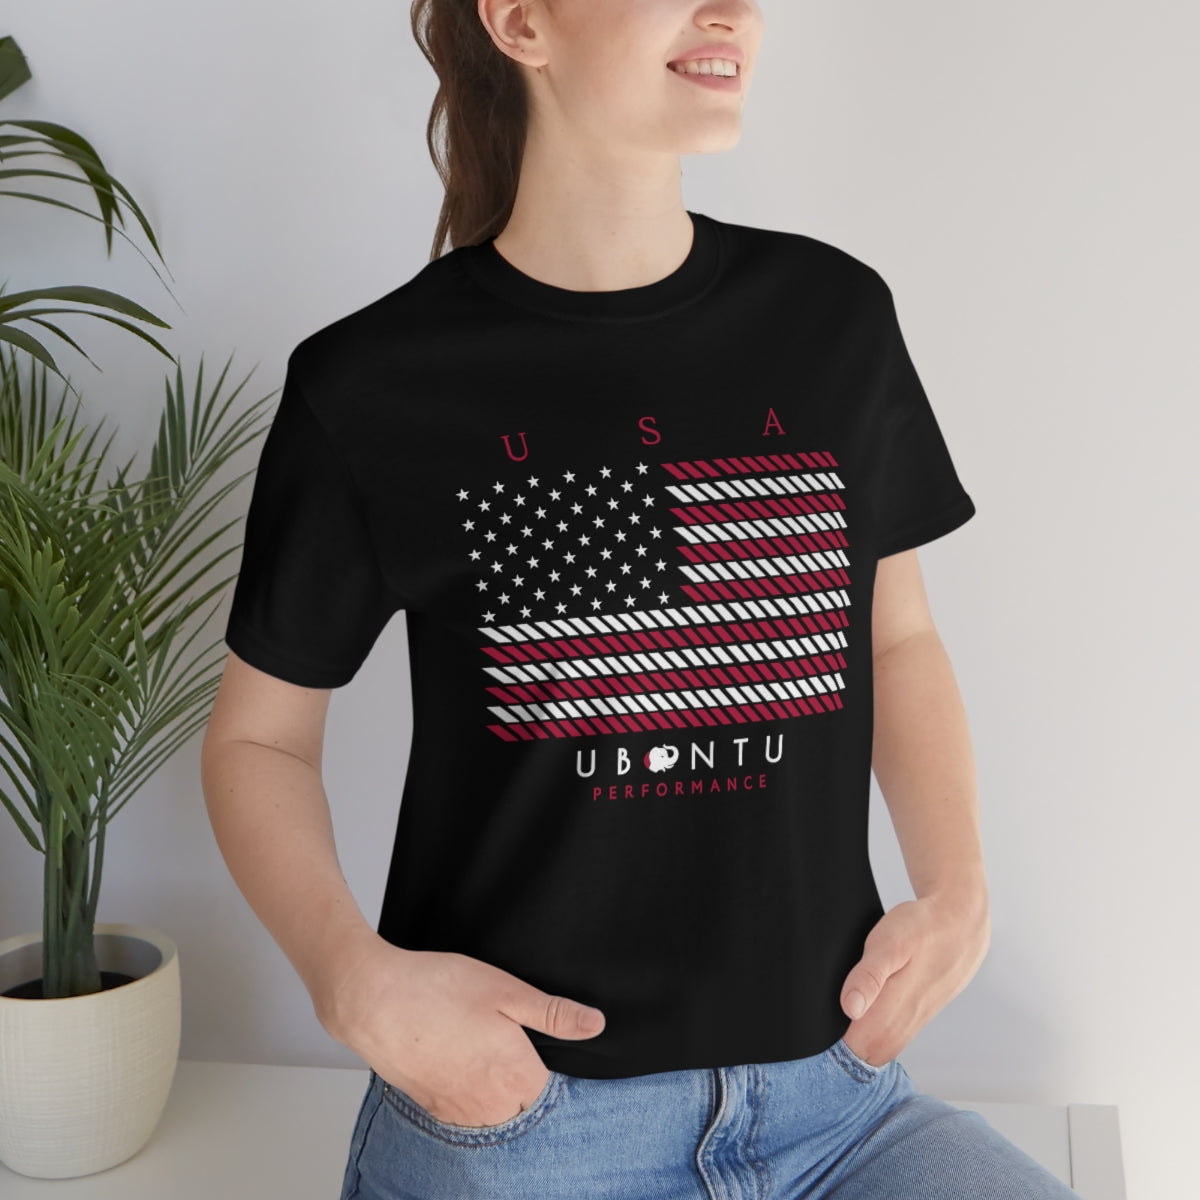 USA  flag colors  men's women's unisex tee Ubuntu Performance football soccer fans  world cup gift t shirt